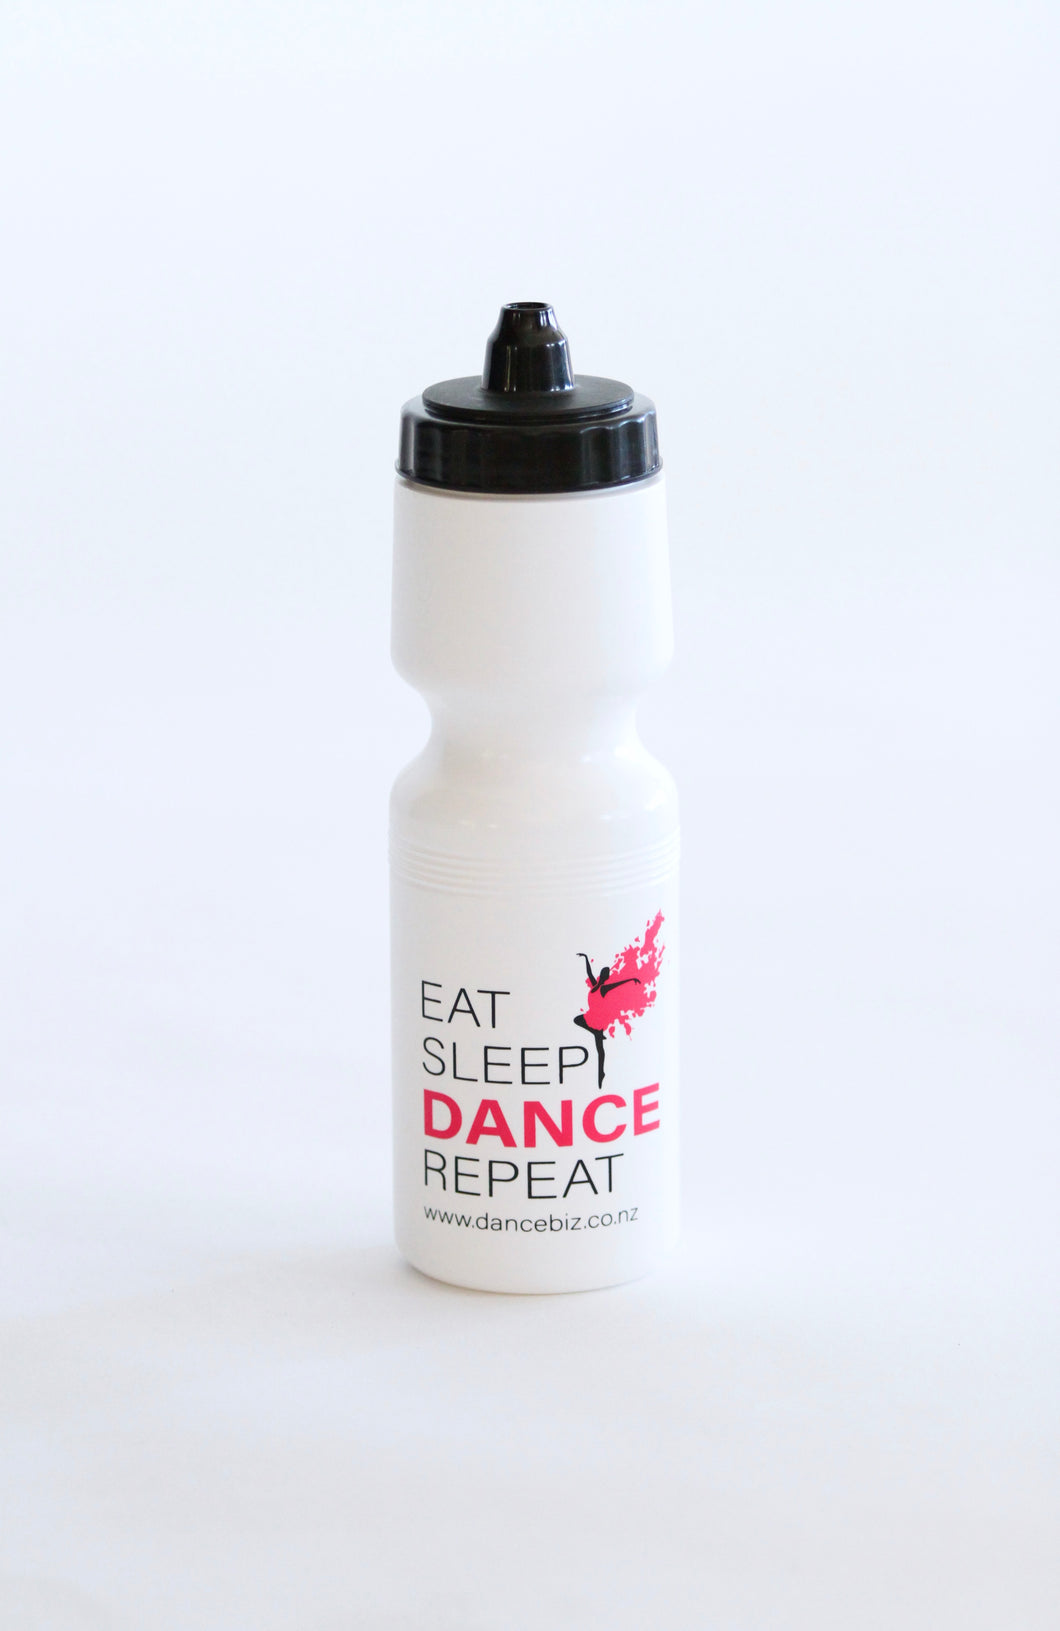 Dance Drink Bottle - Eat, Sleep, ,Dance ,Repeat